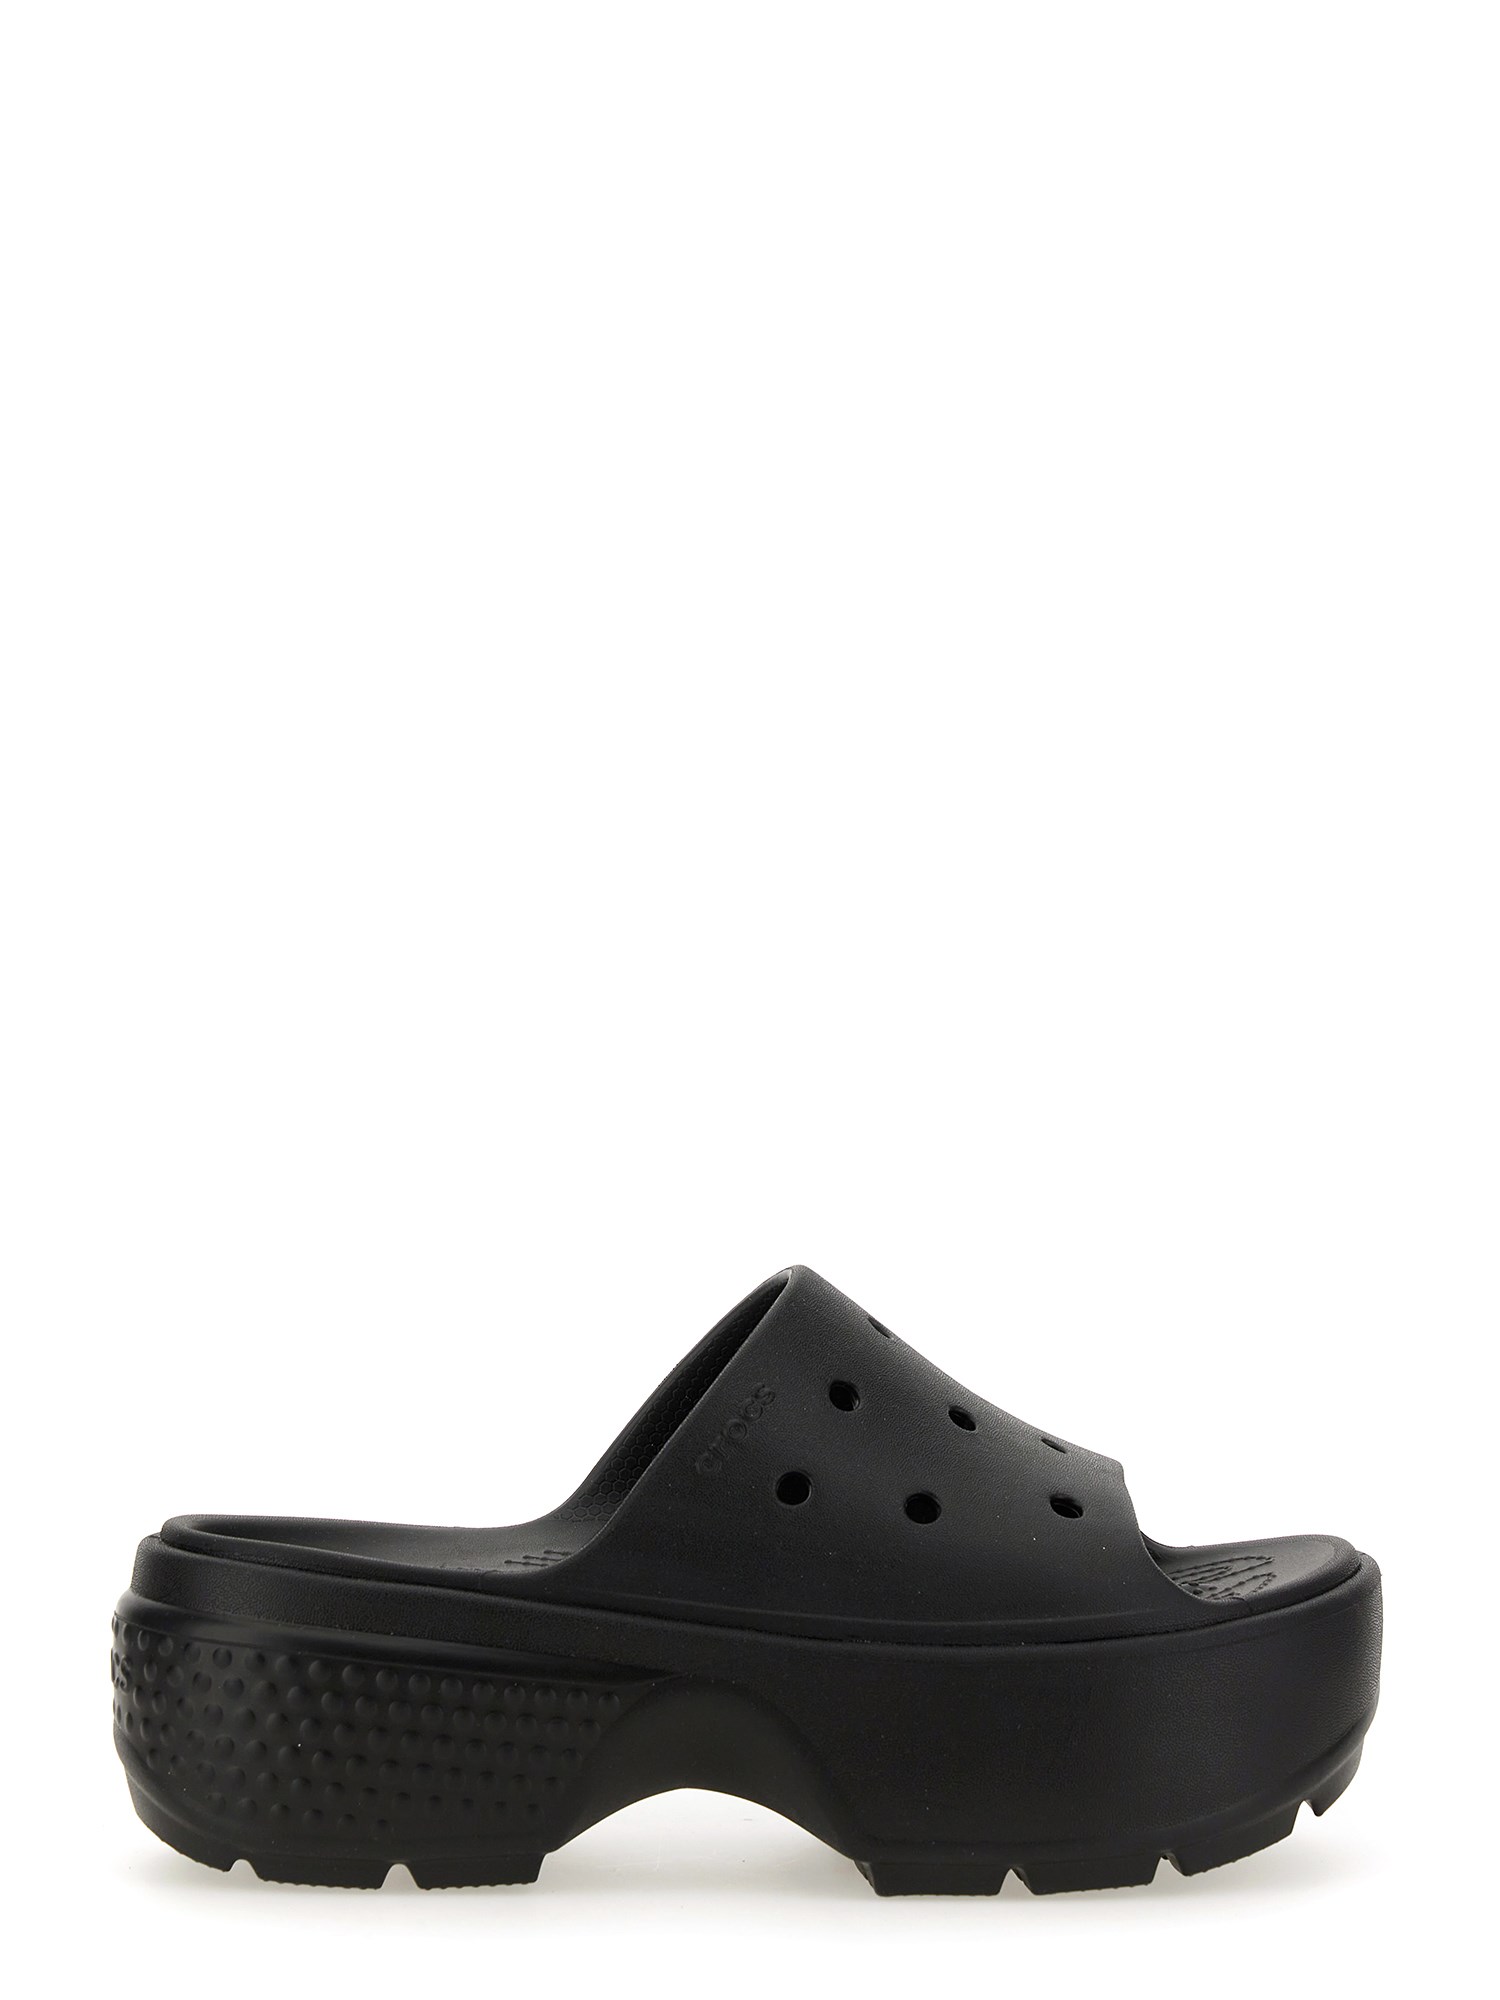 crocs slide sandal 